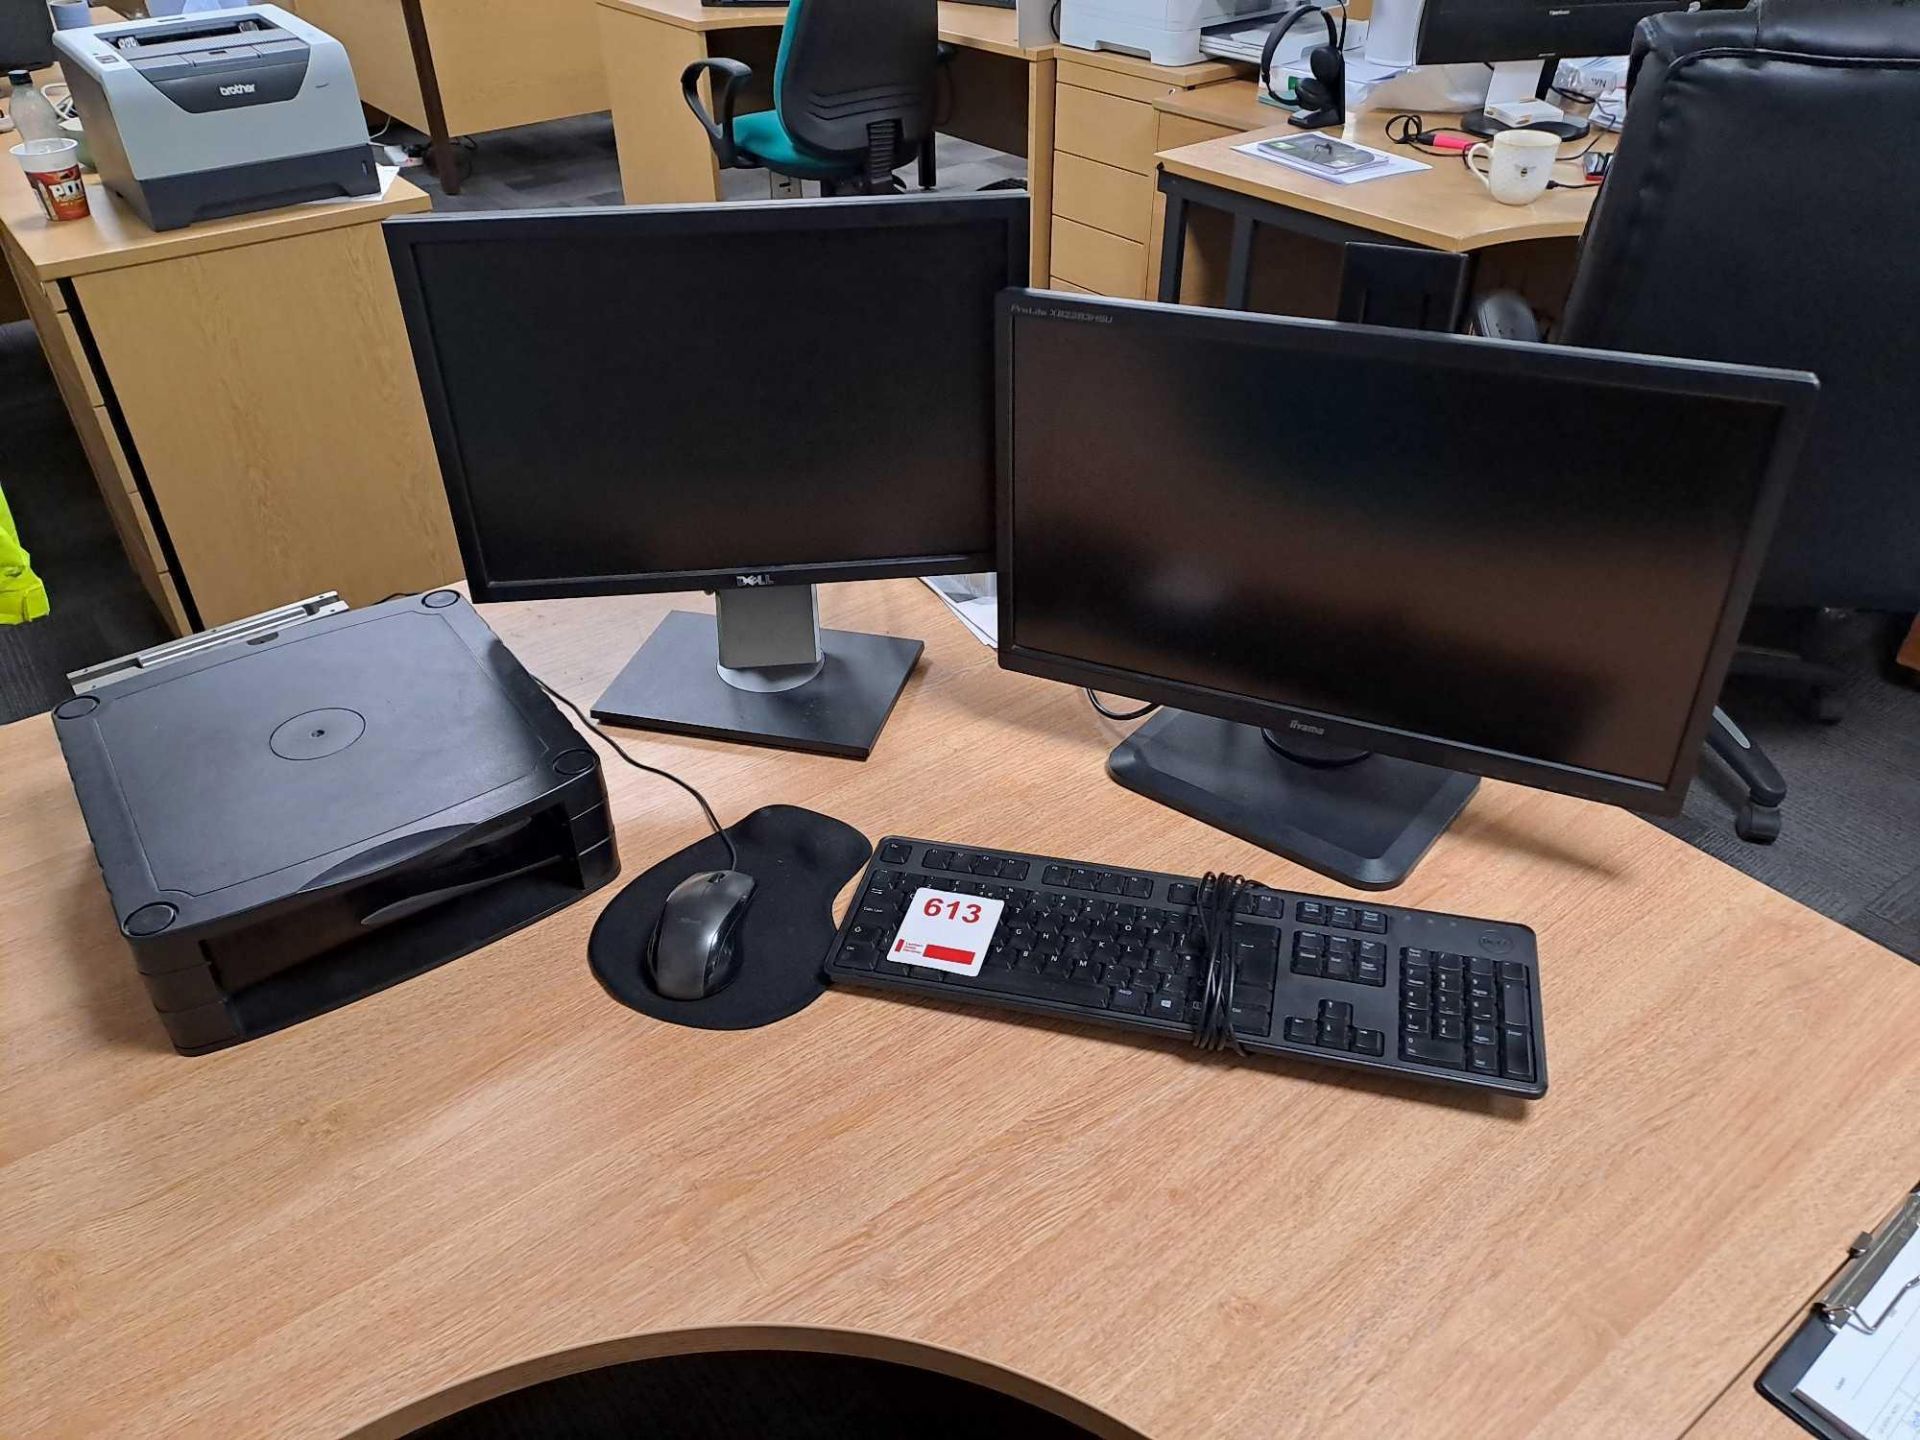 Two monitors (Dell & Ilyama), raised laptop stand, keyboard & mouse